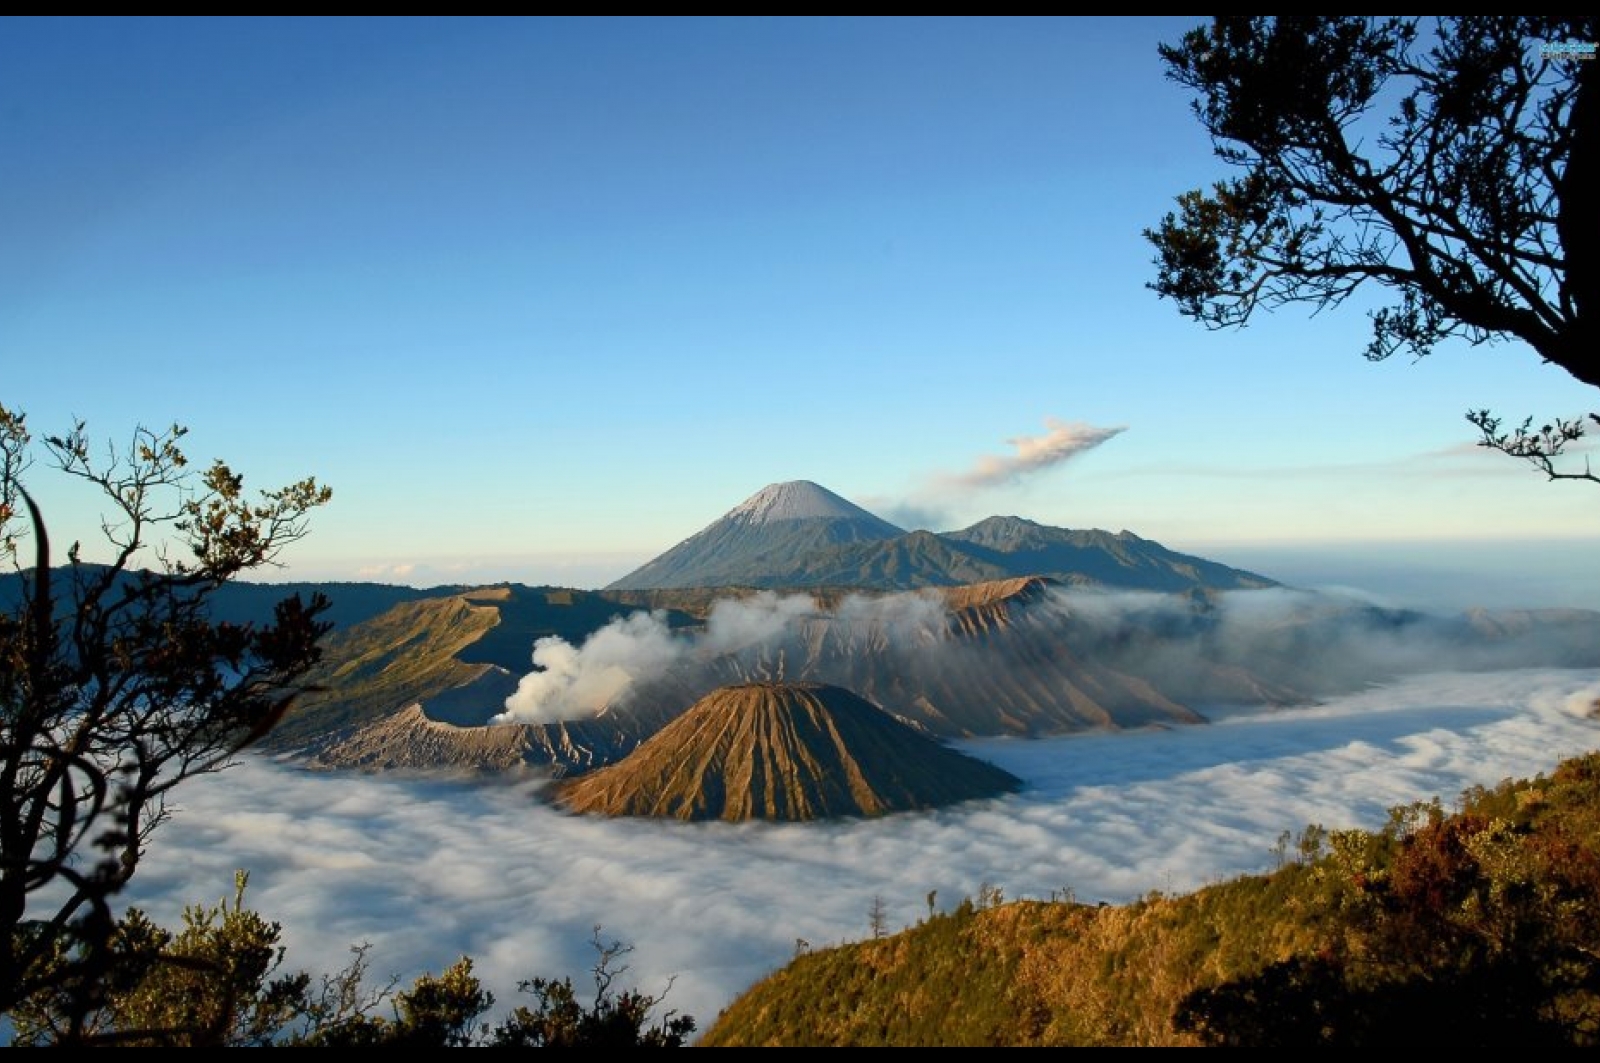 Sunrise tour at Mount Bromo, Surabaya, Indonesia | Gokayu, Your Travel